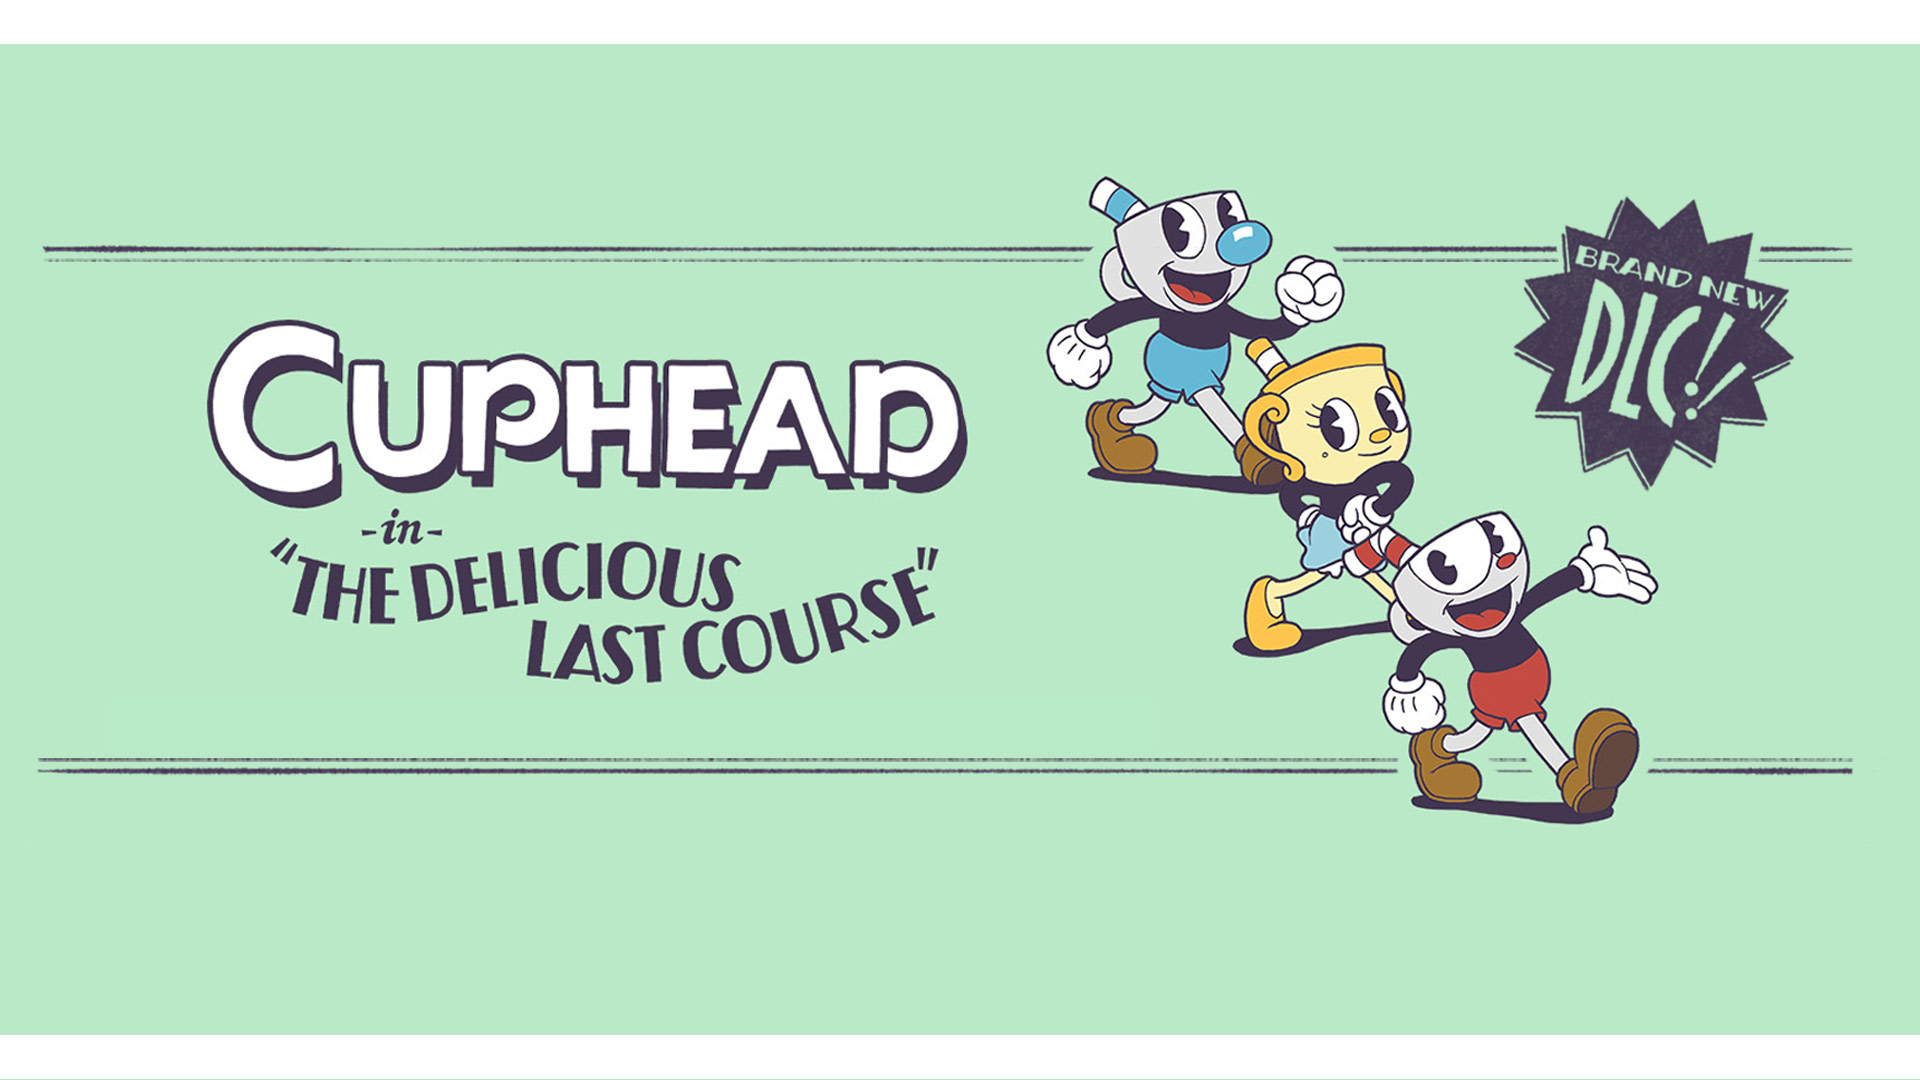 Cuphead in The Delicious Last Course, Gloednieuwe DLC!, 3 Cuphead-personages poseren